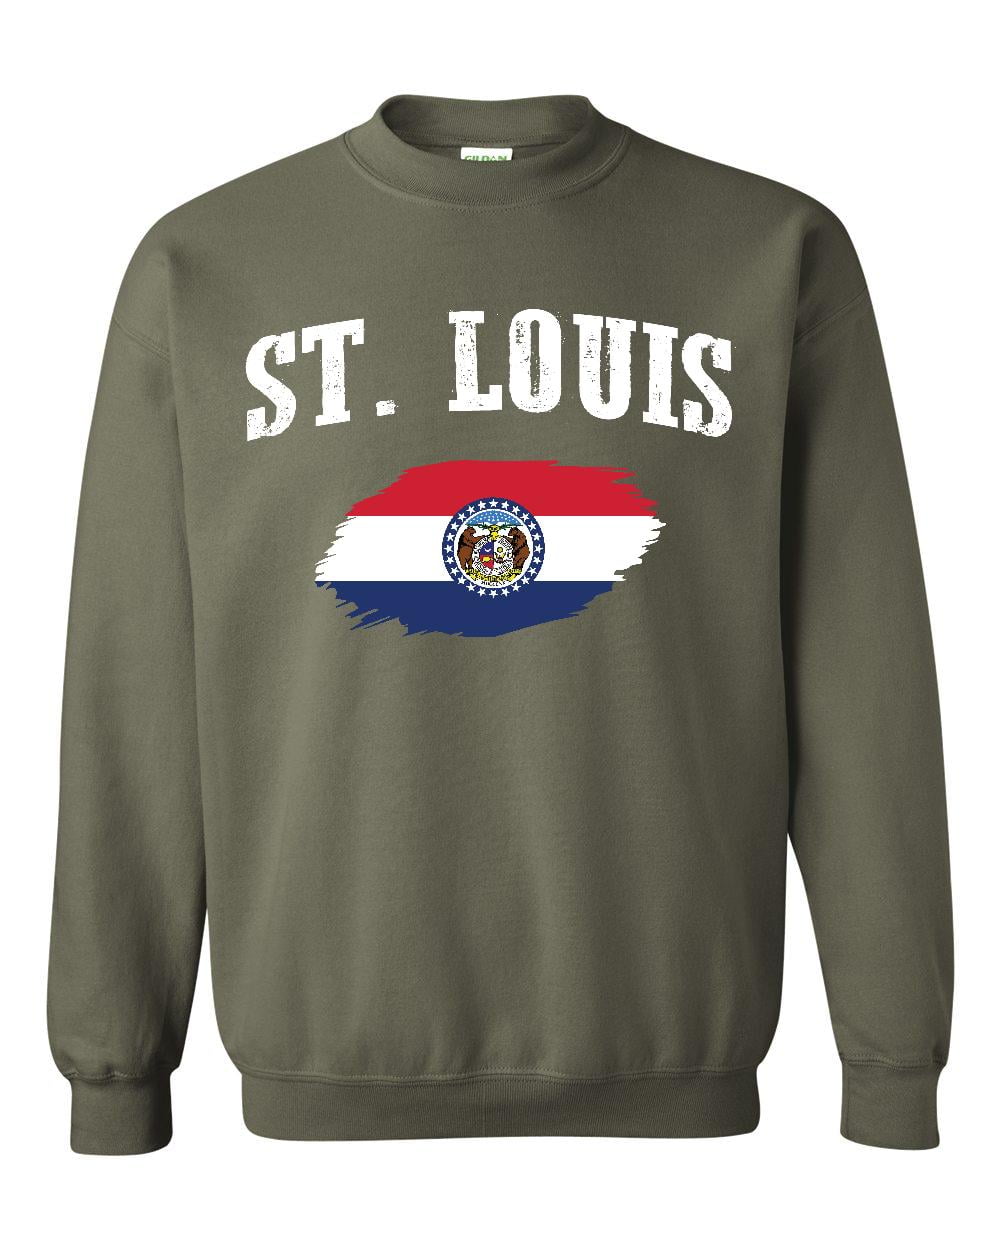 MmF - Plus Sweatshirts and Hoodies - St. Louis 